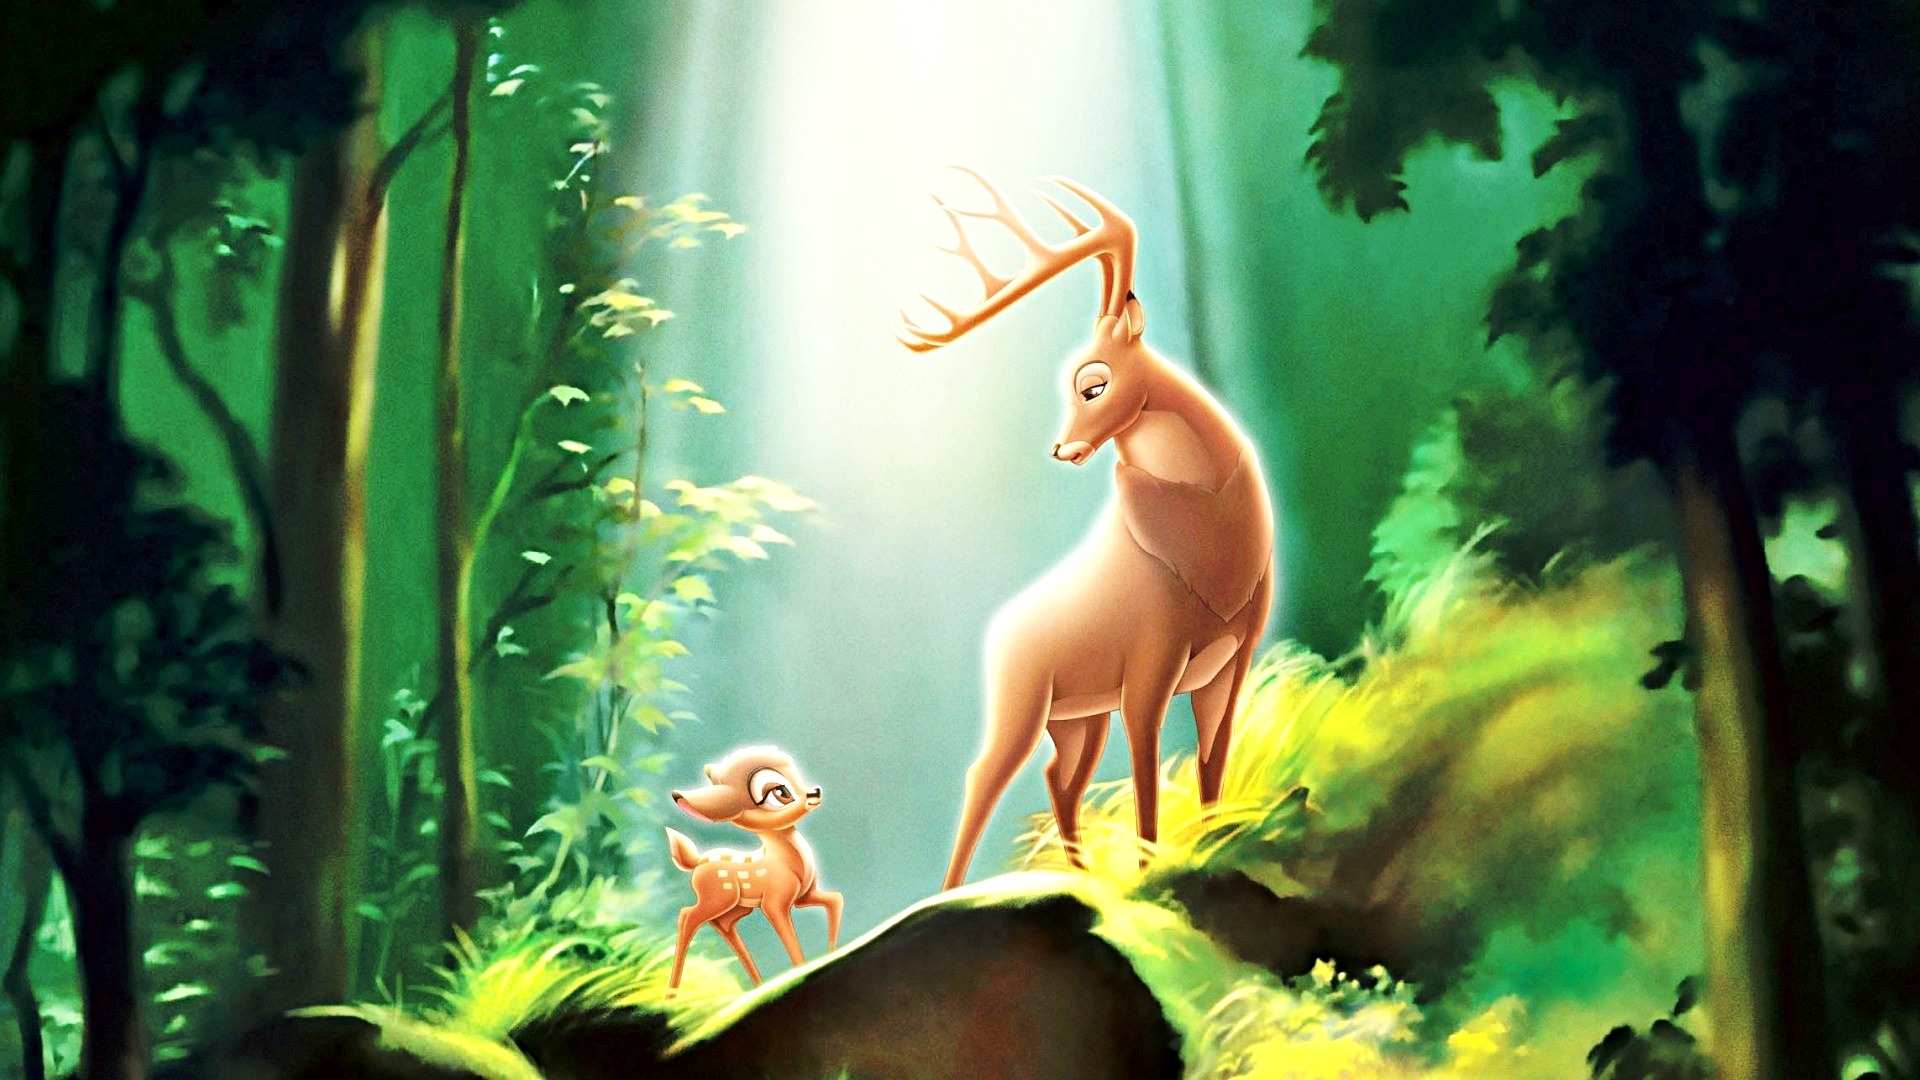 Walt Disney Wallpaper Bambi Characters